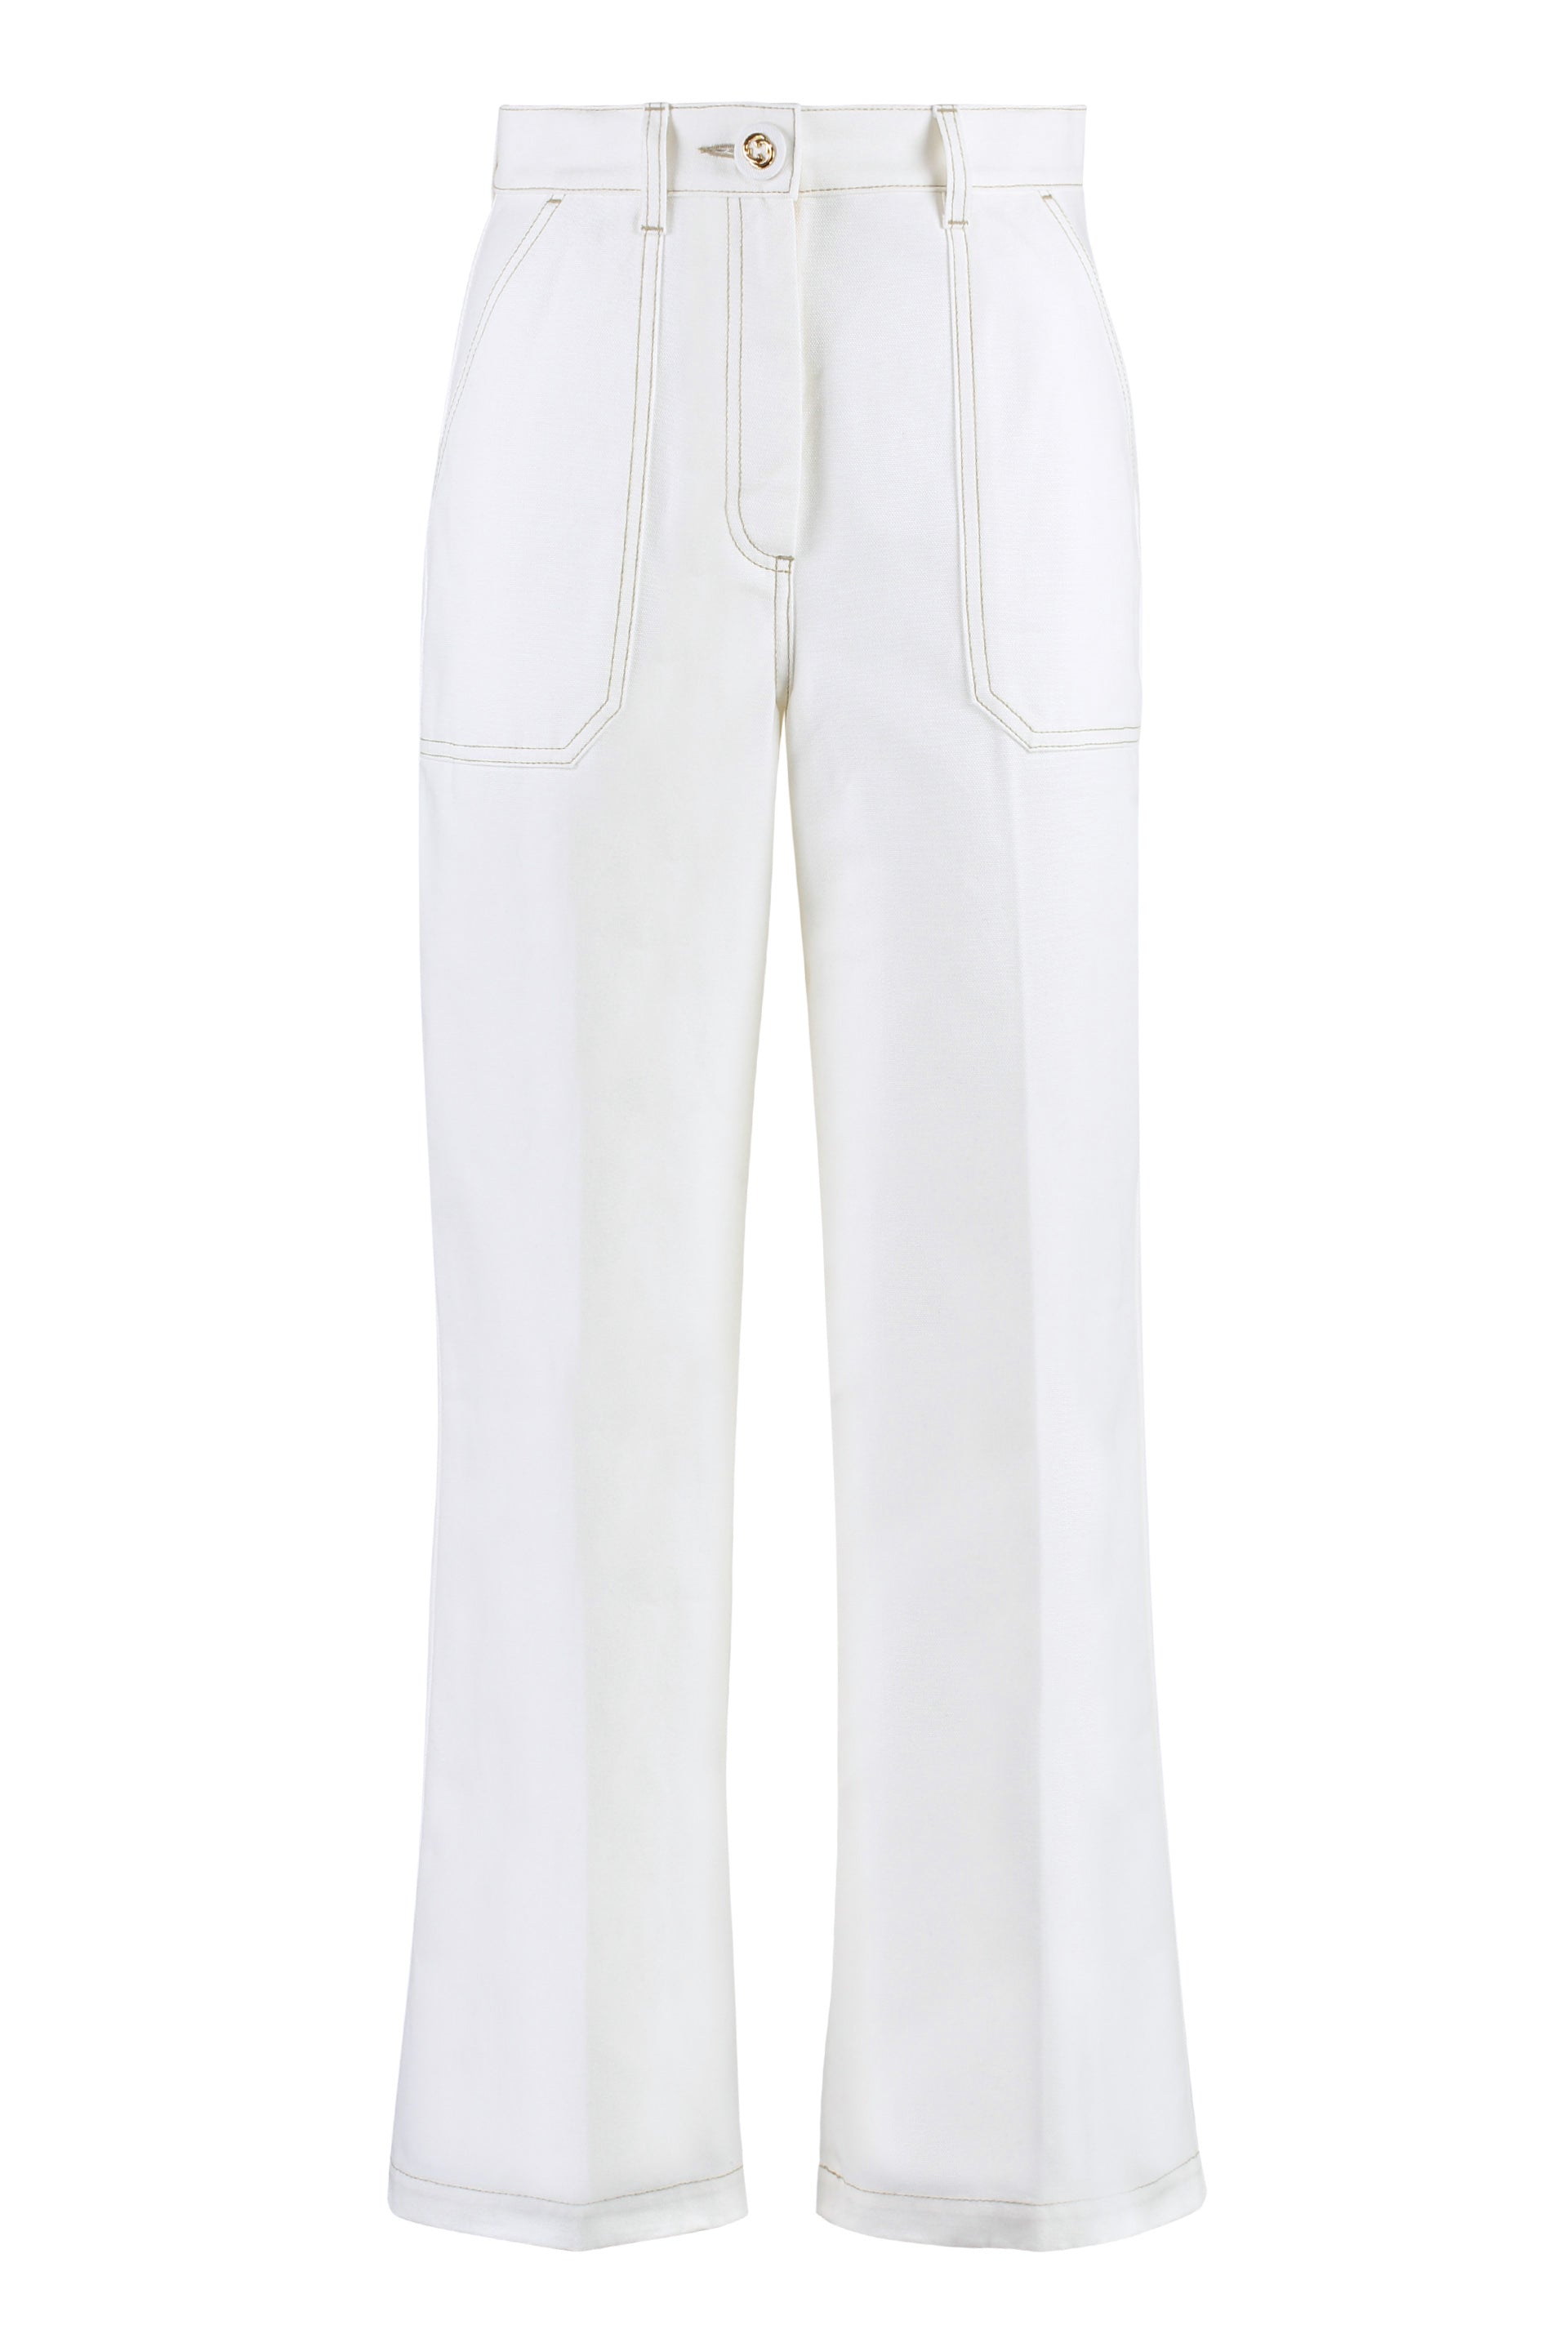 Shop Gucci White Cotton Denim Trousers For Women